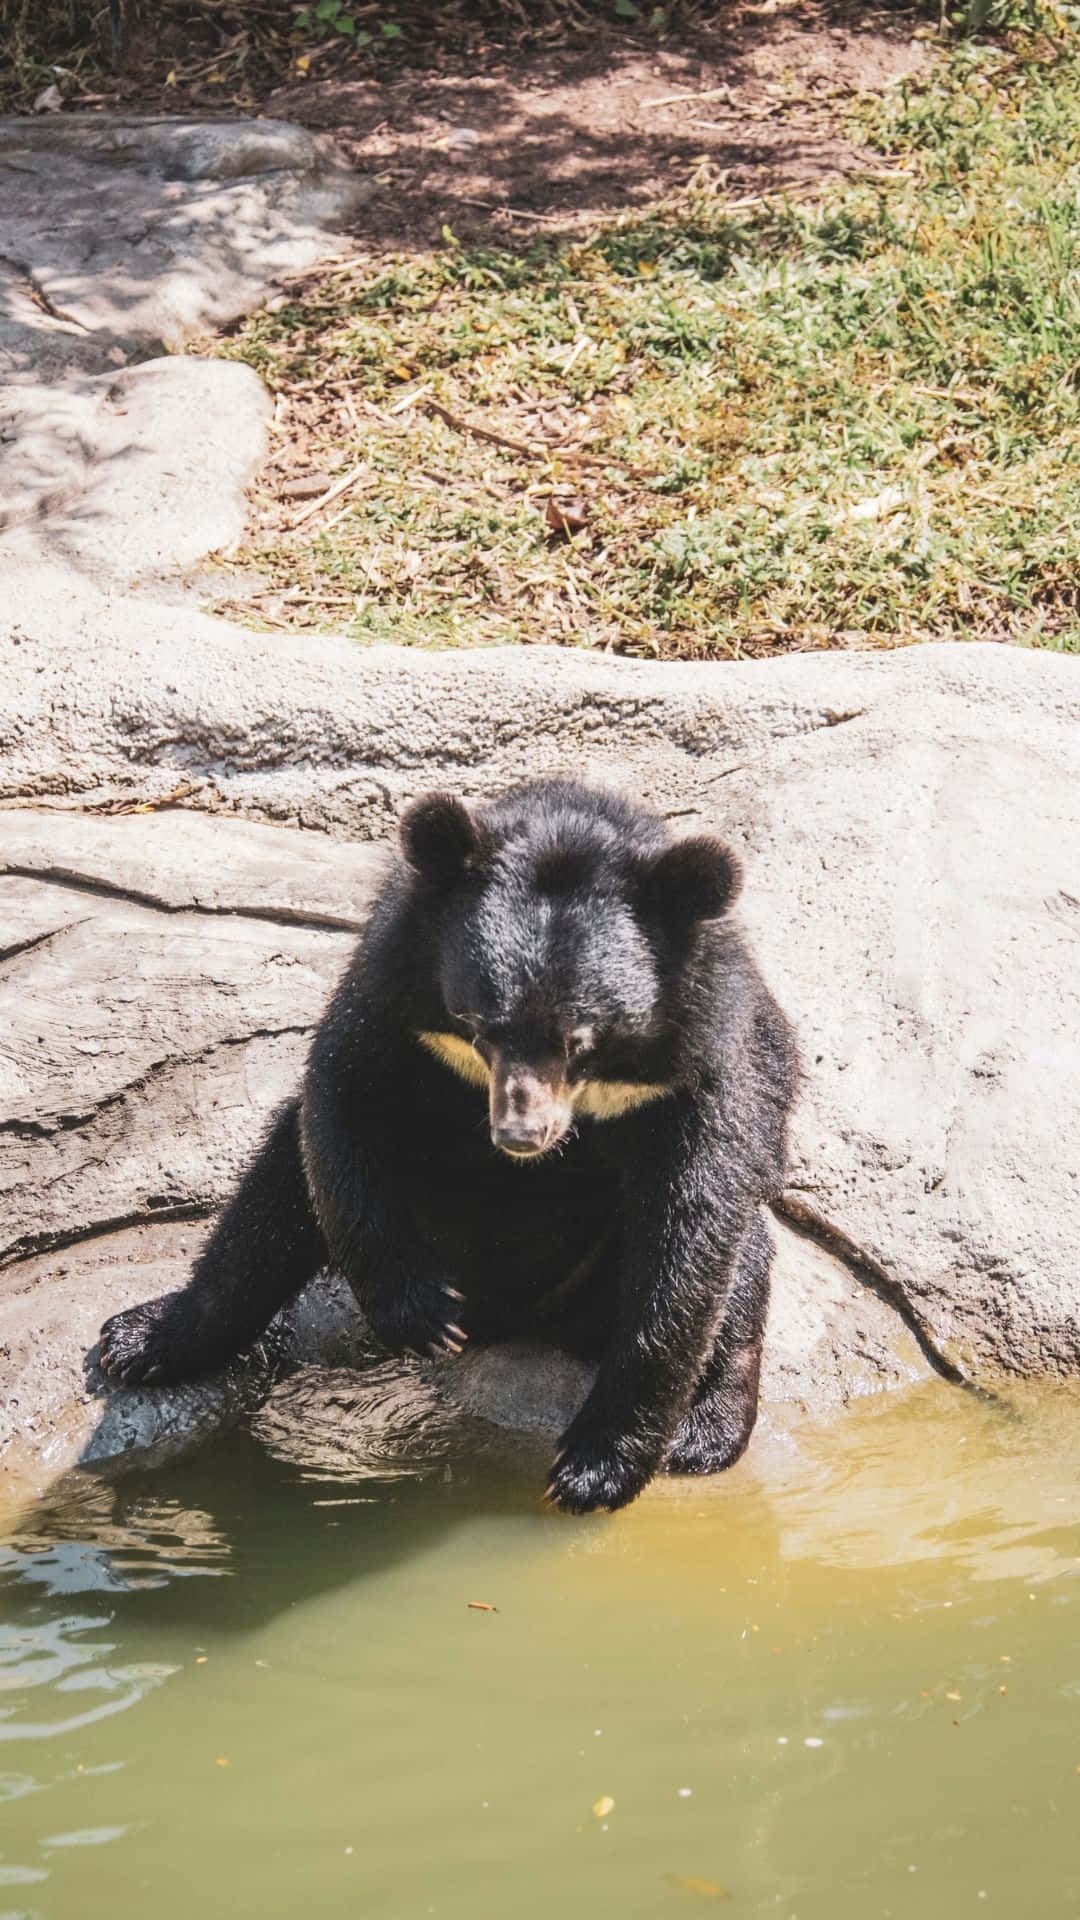 Caption: Majestic Brown Bear In Natural Habitat